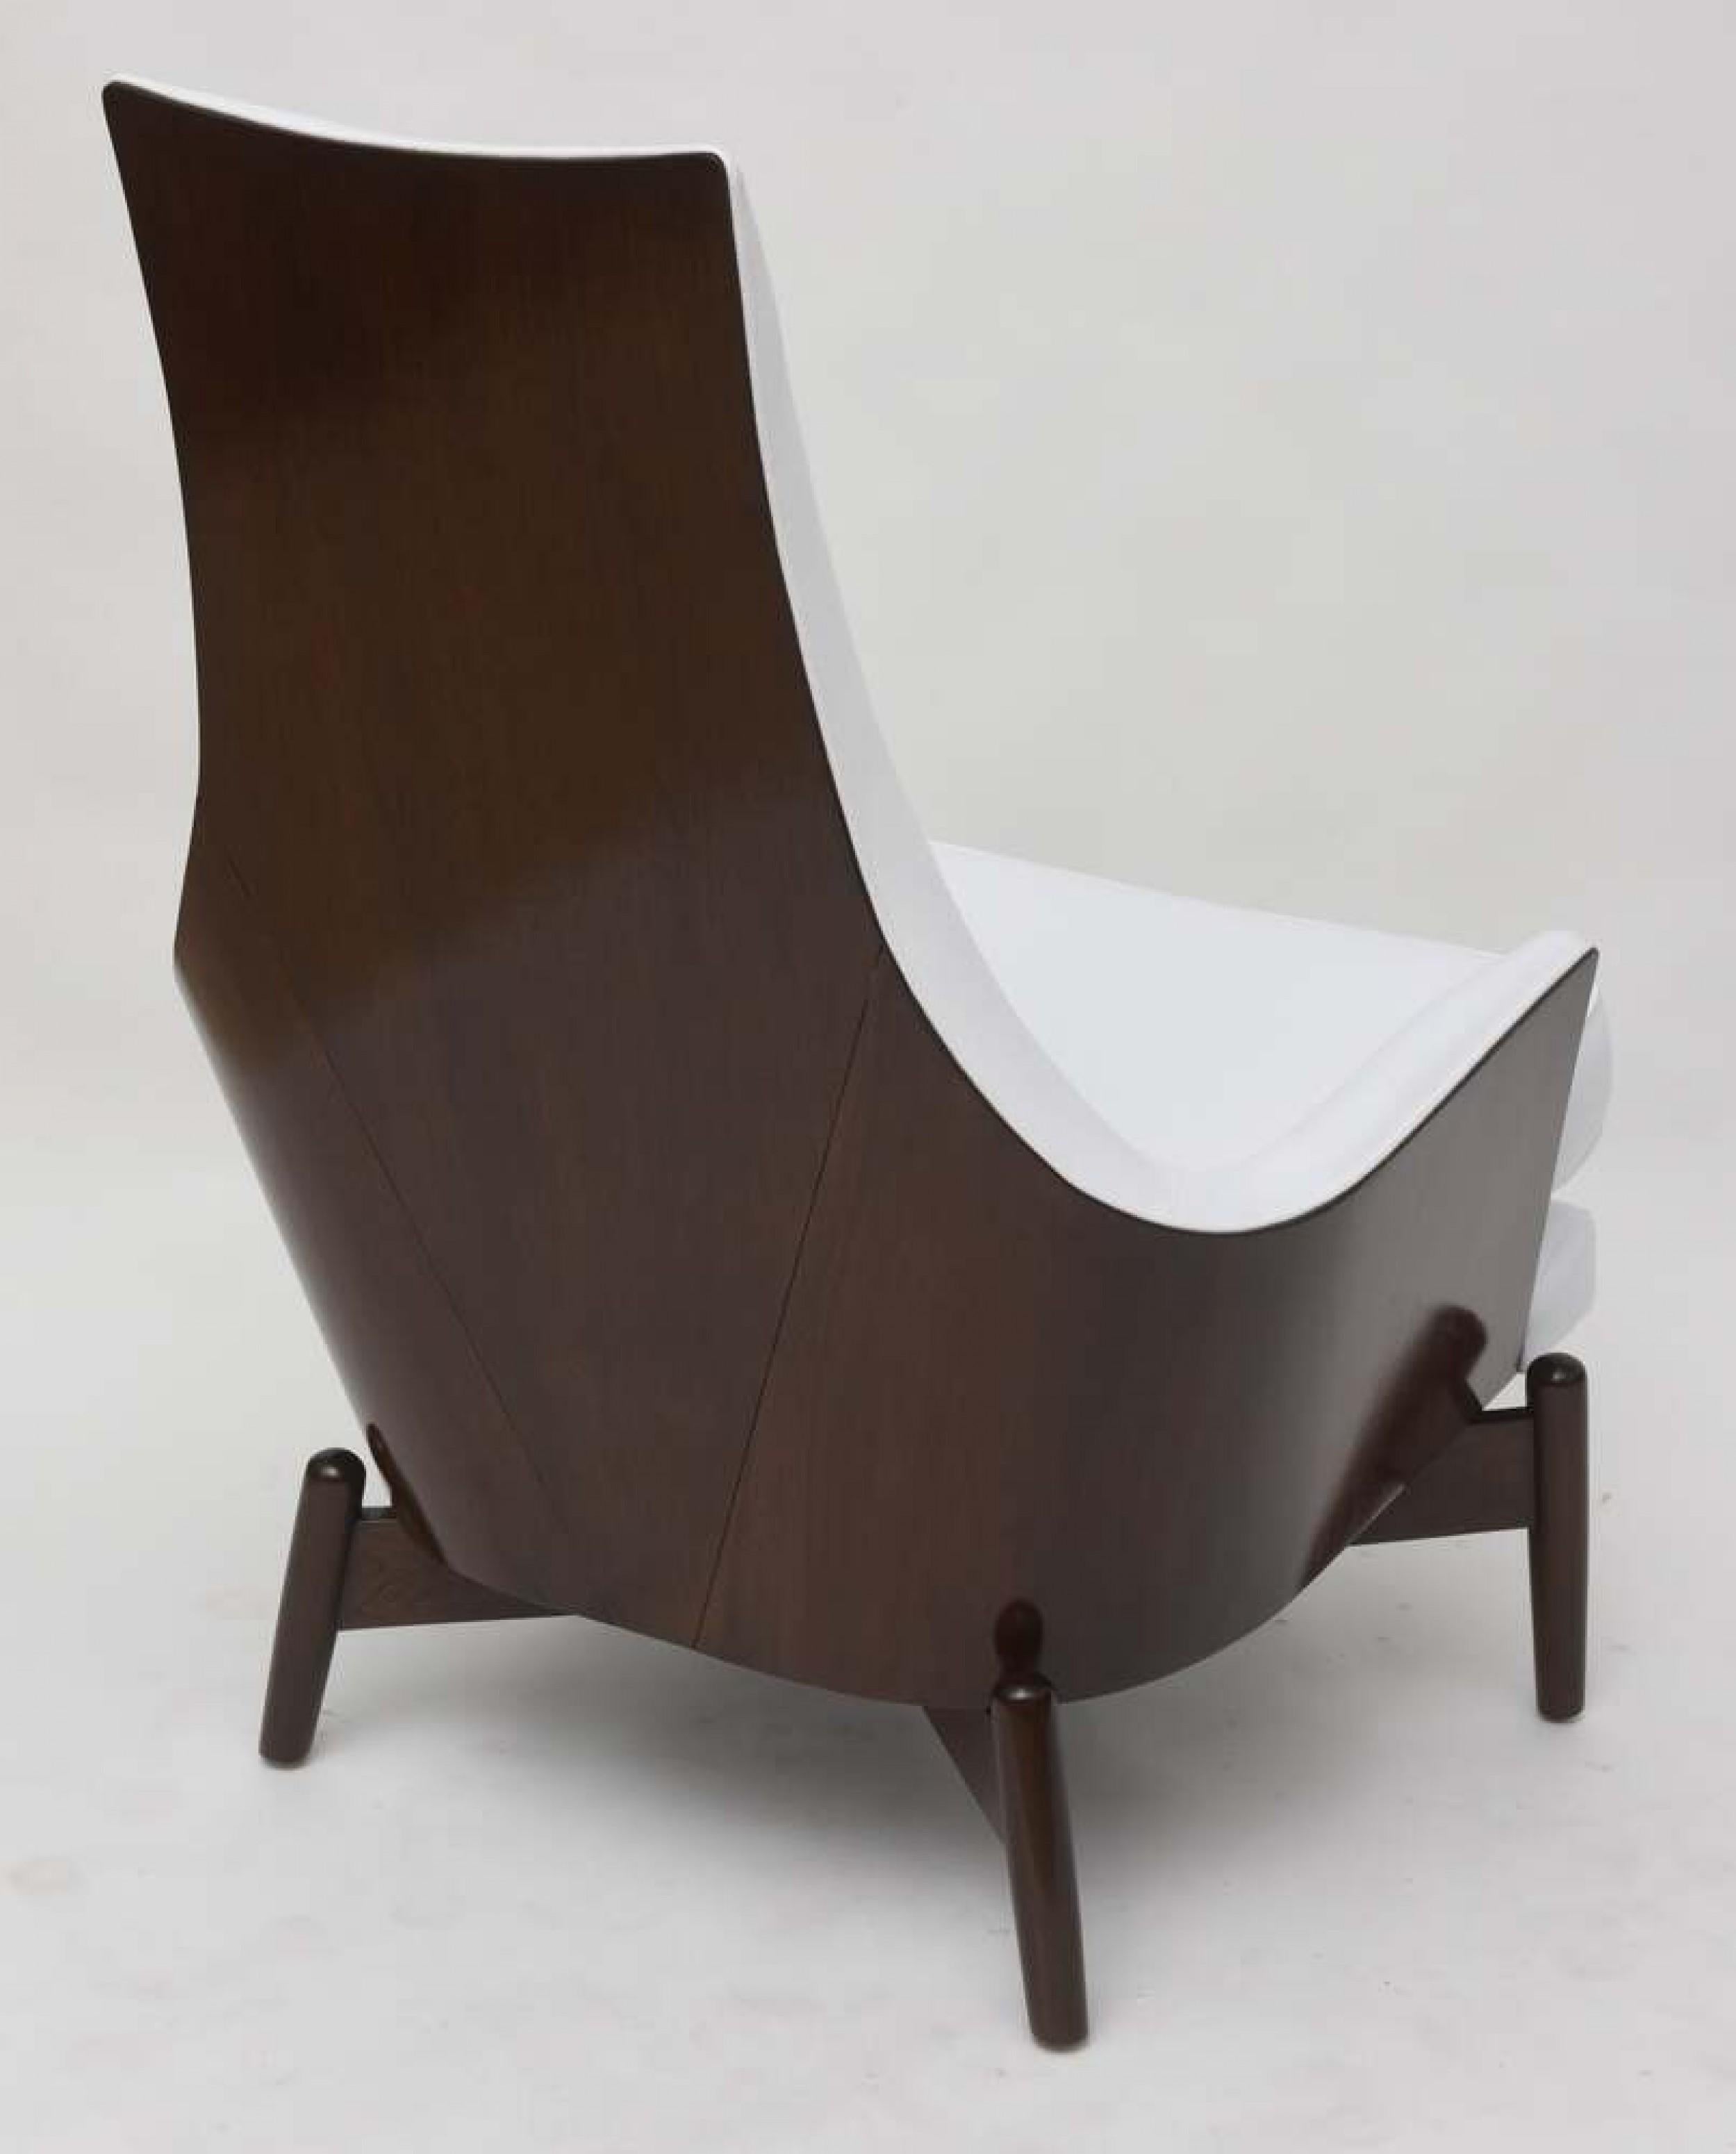 Ib Kofod Larsen Midcentury Danish Modern Walnut and White Upholstery Armchair For Sale 2